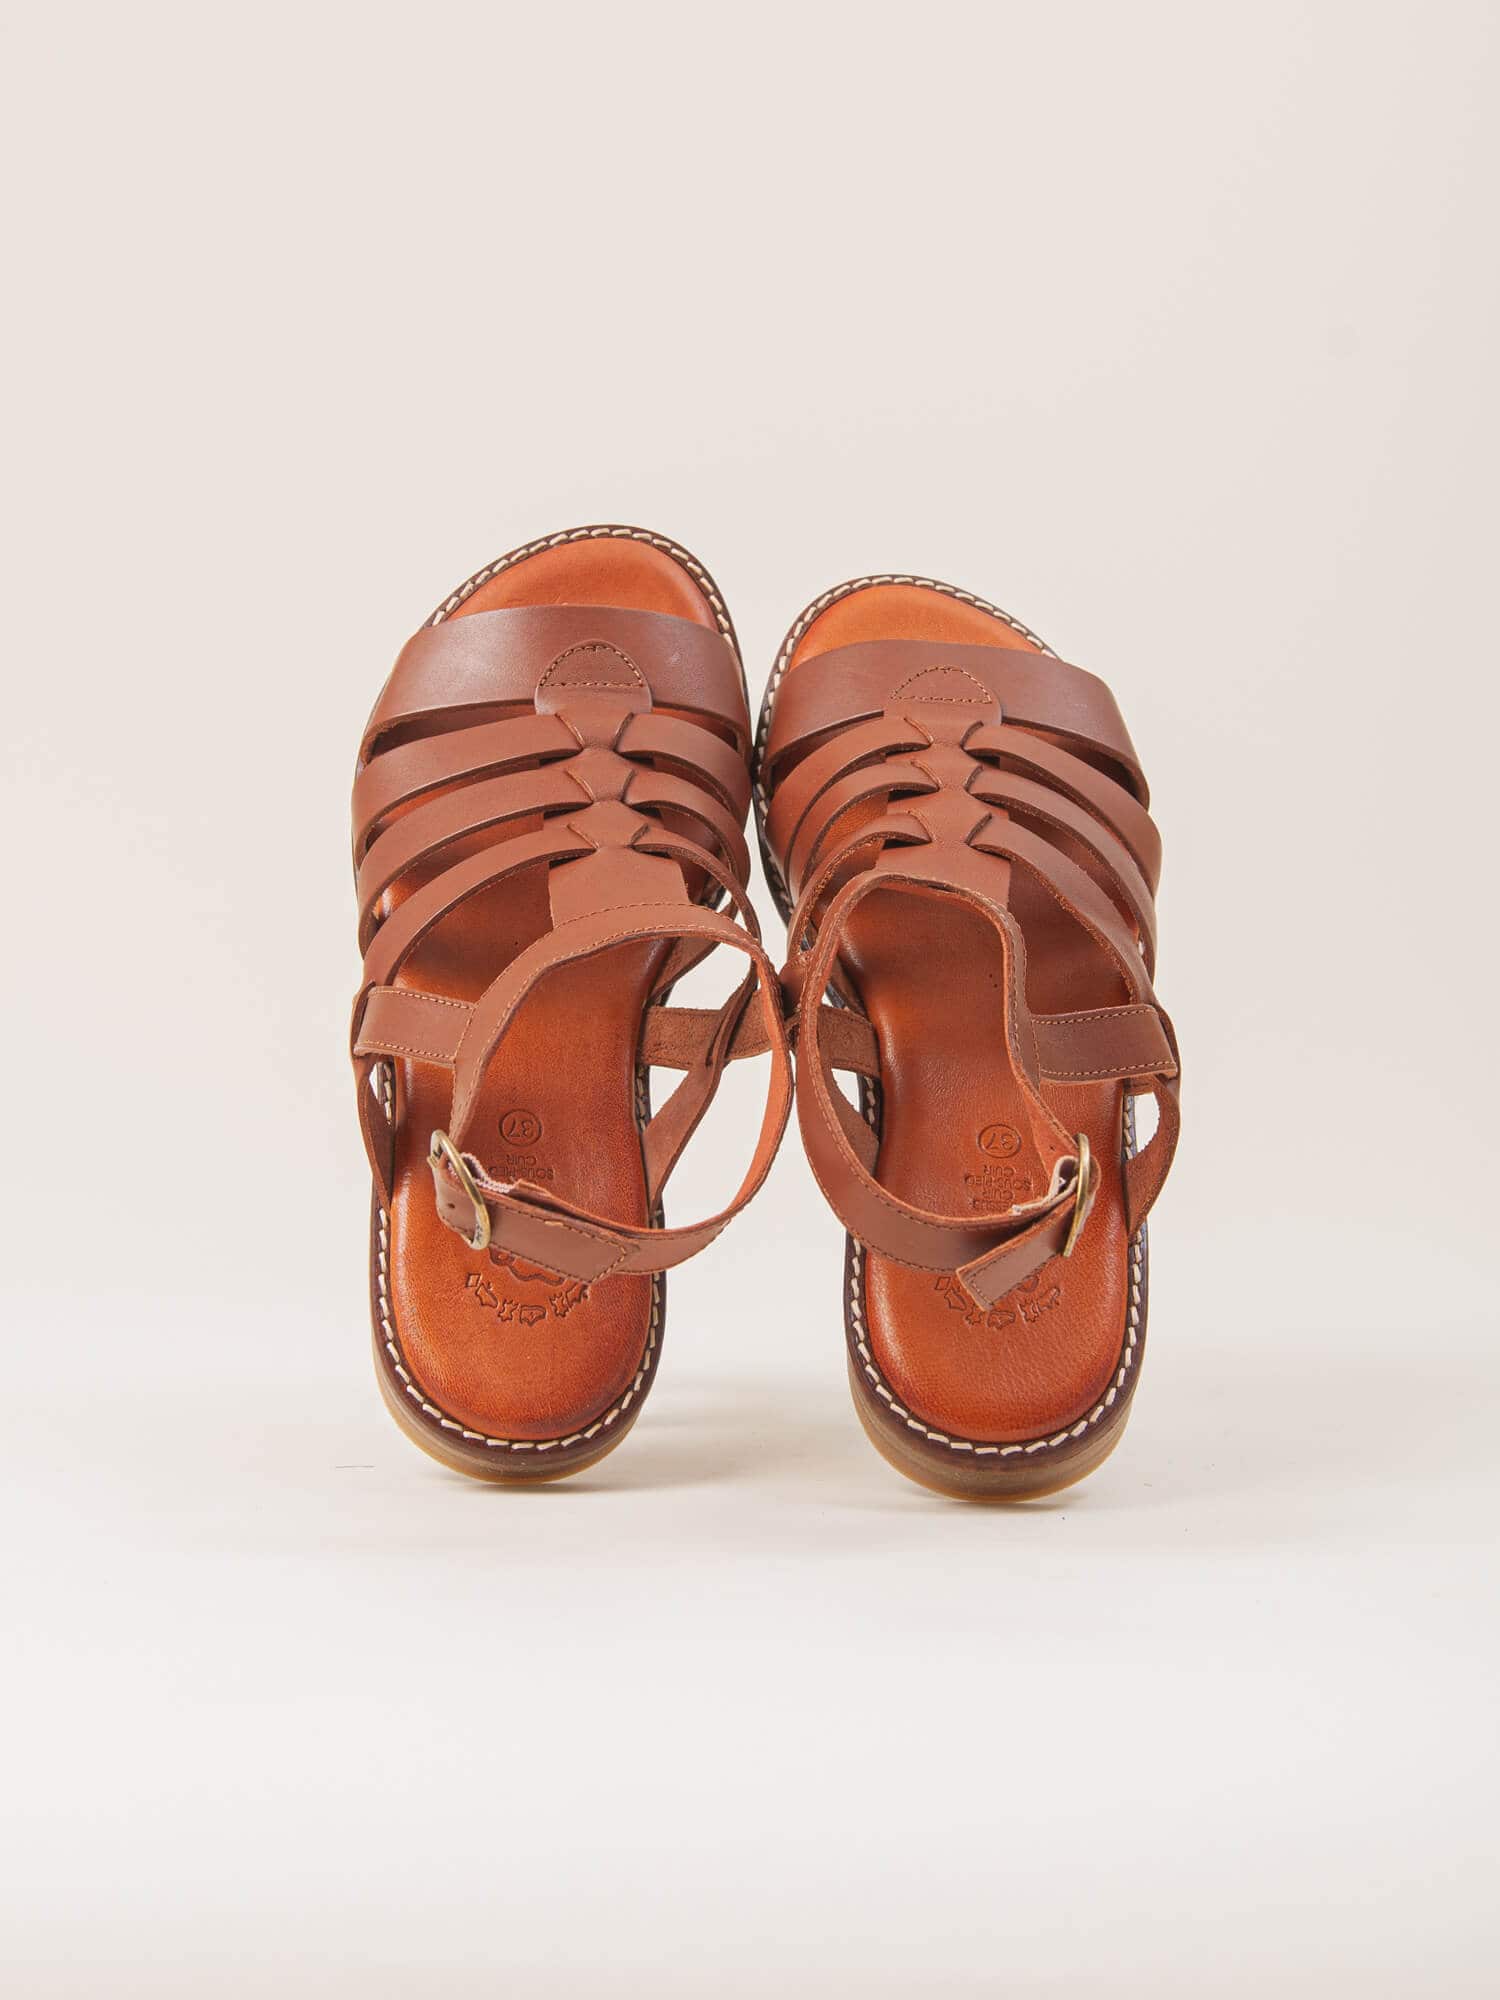 Sandalia estilo romana. Zapato de mujer cómodo y elegante.